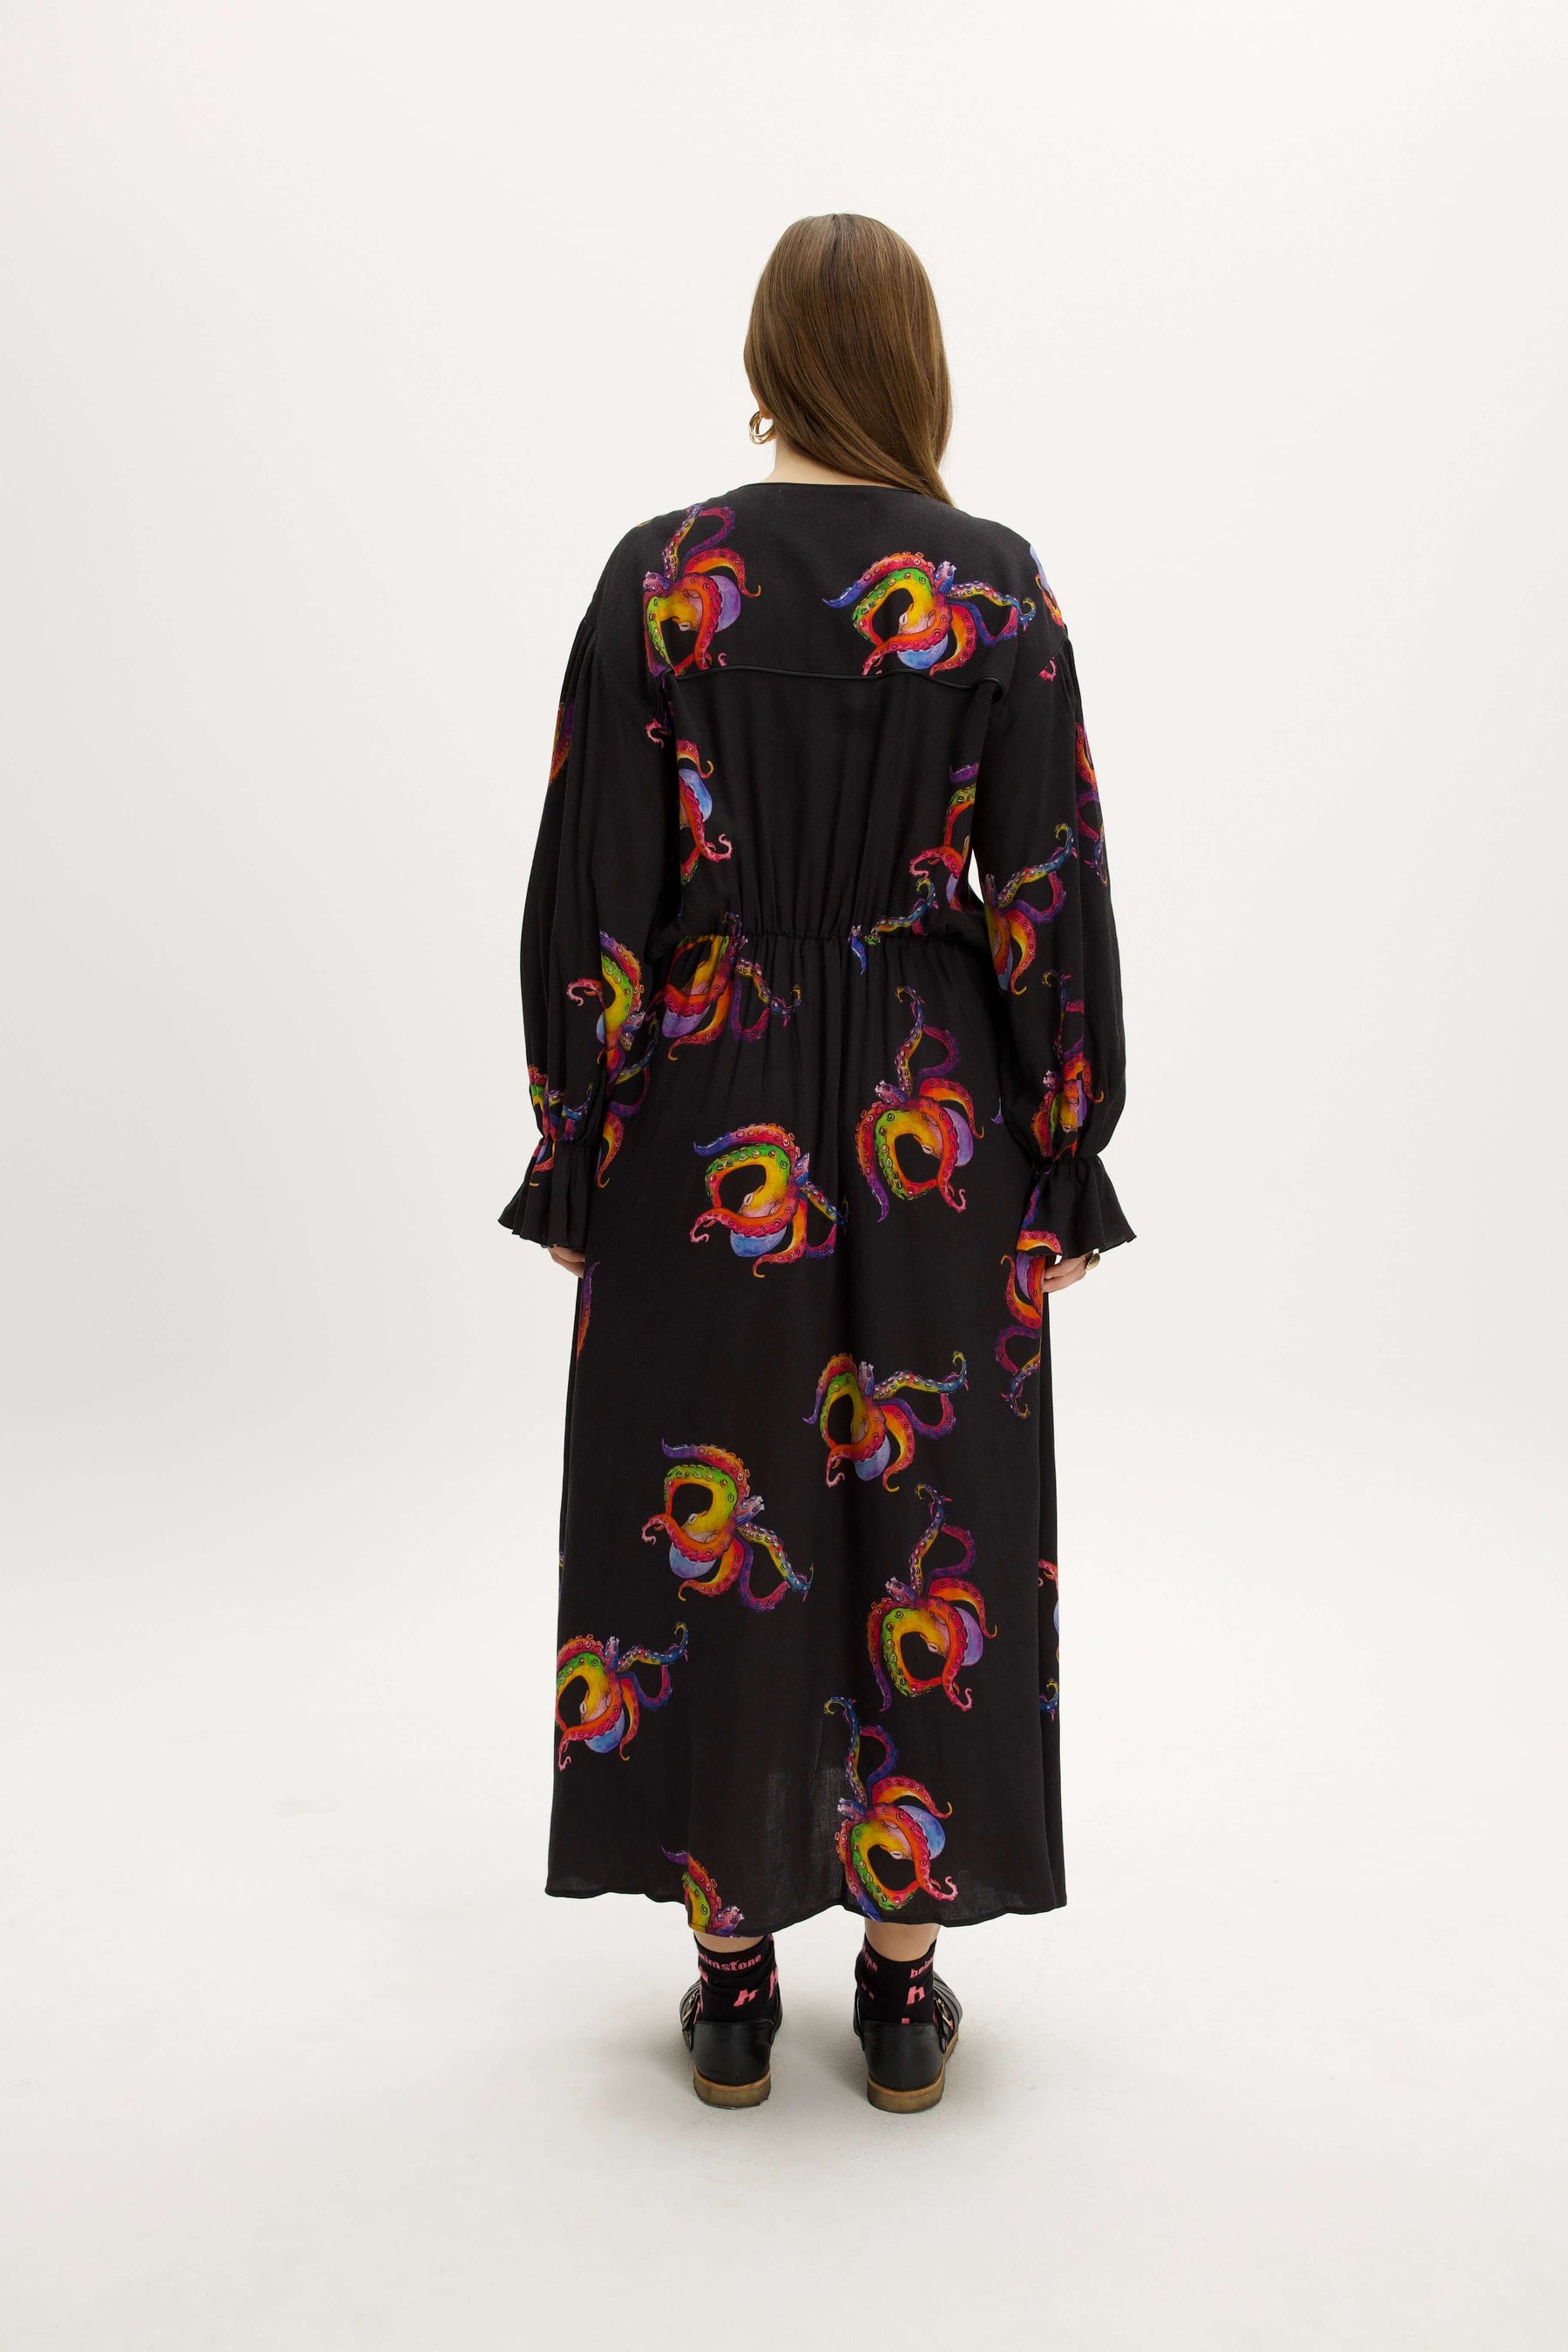 Pili dress in Poulpe Heureux print